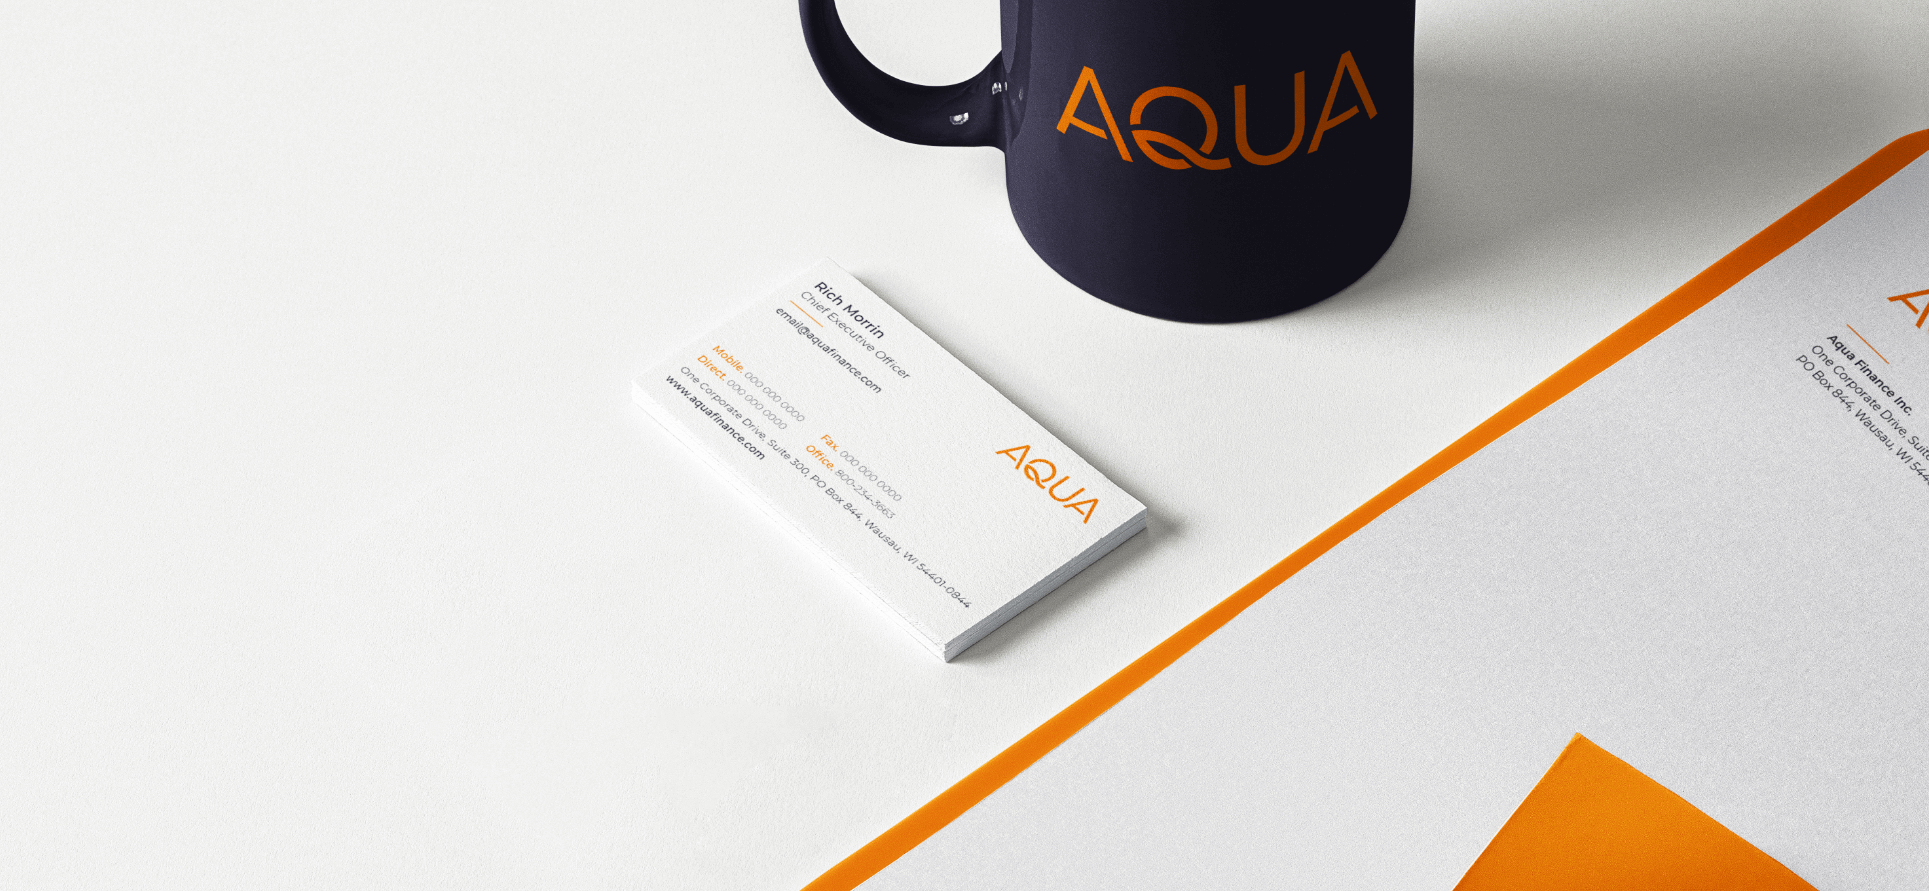 Aqua-branded stationary and mug.